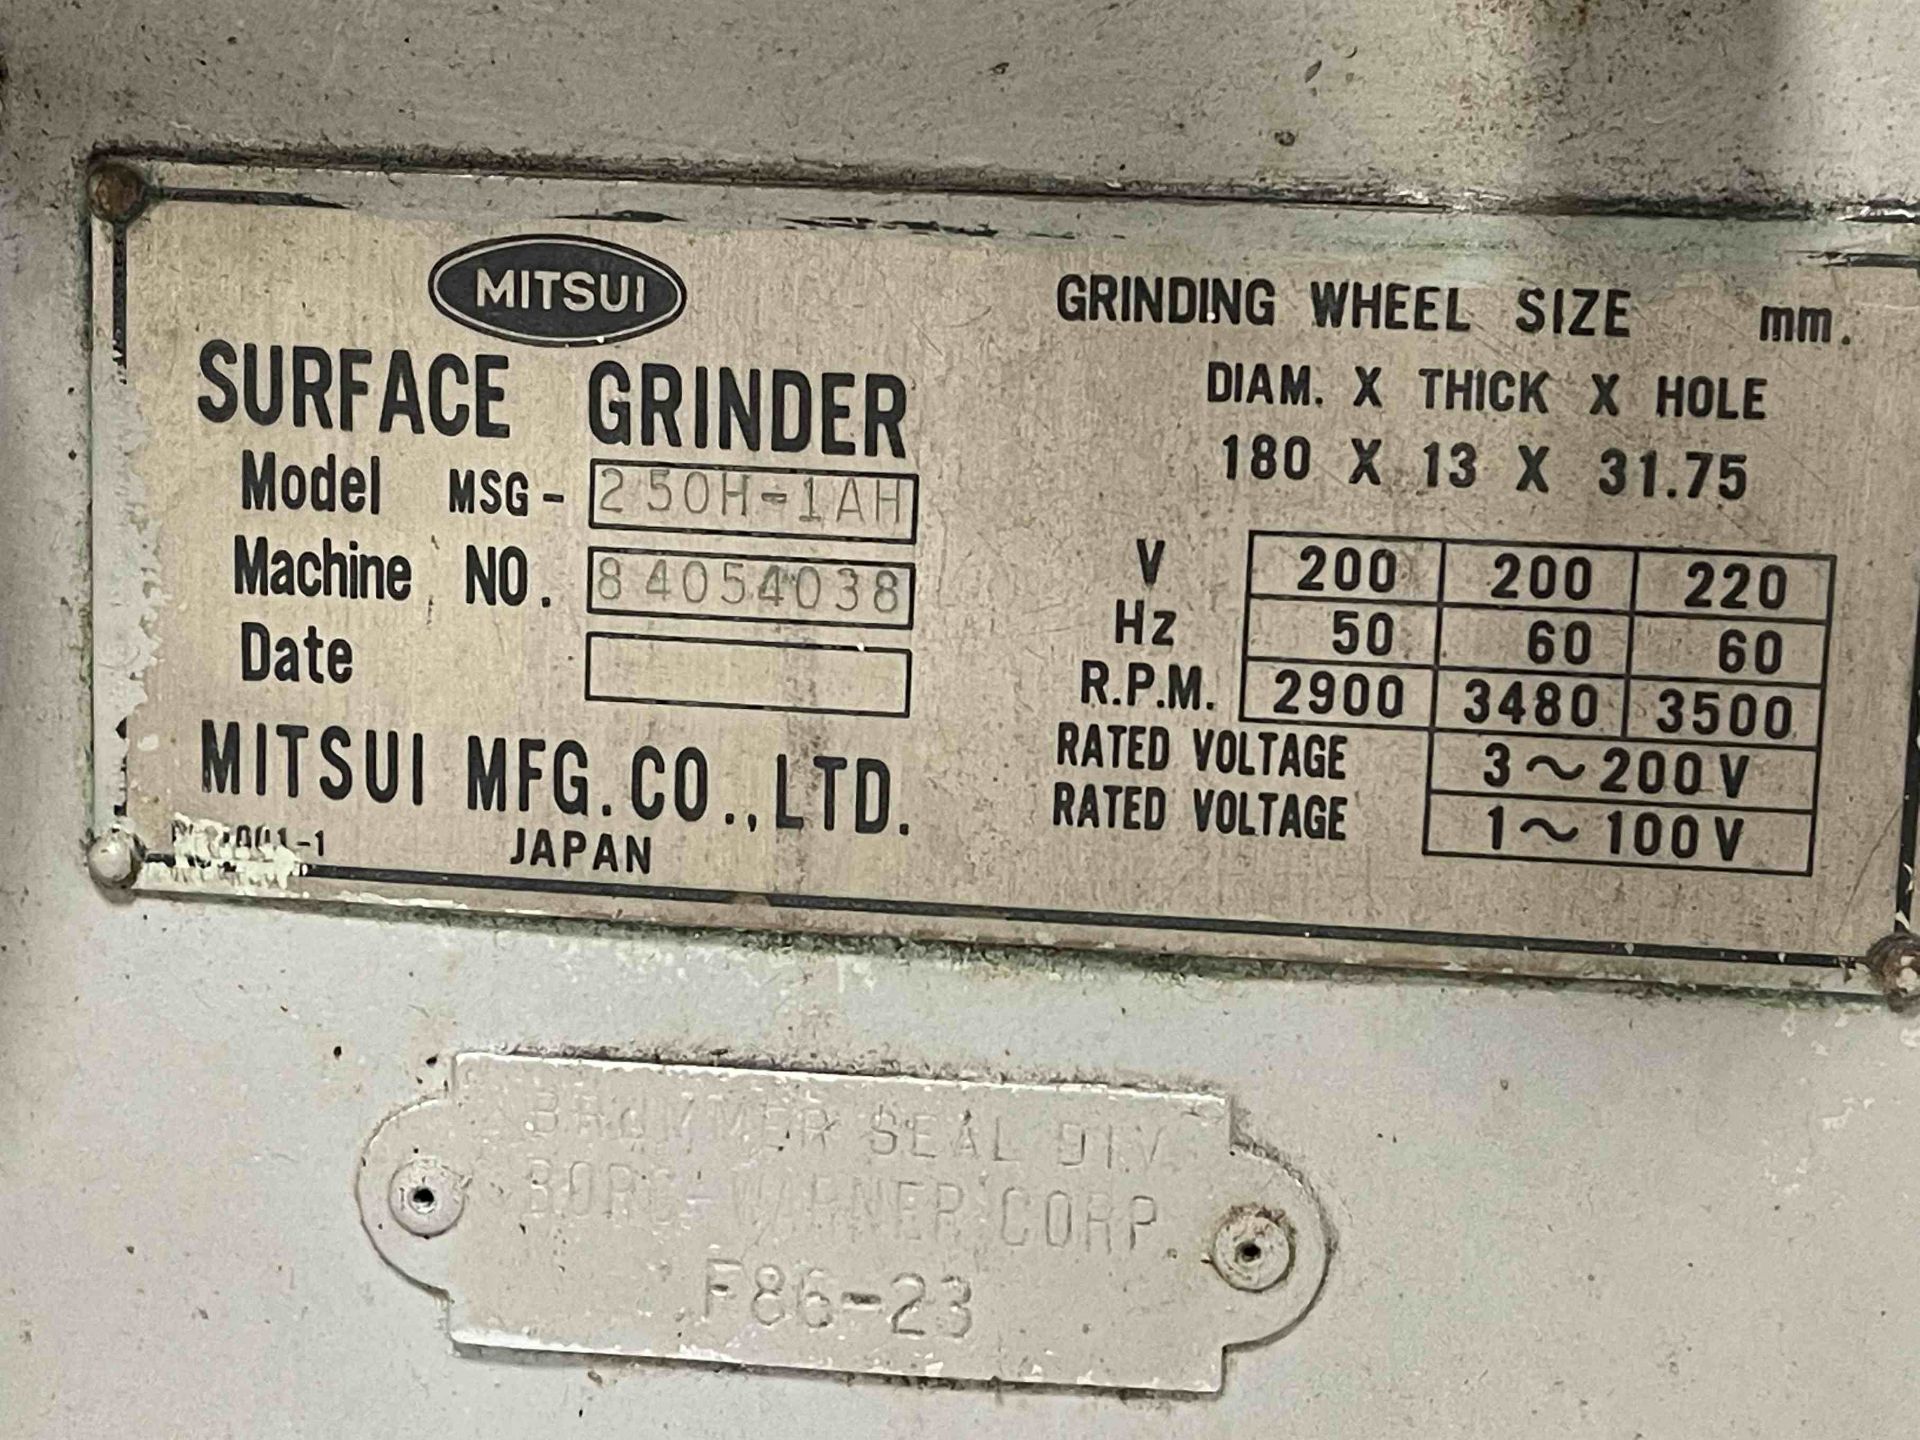 MITSUI MSG-250H-1Ah Surface Grinder, s/n 84054038 - Image 5 of 5